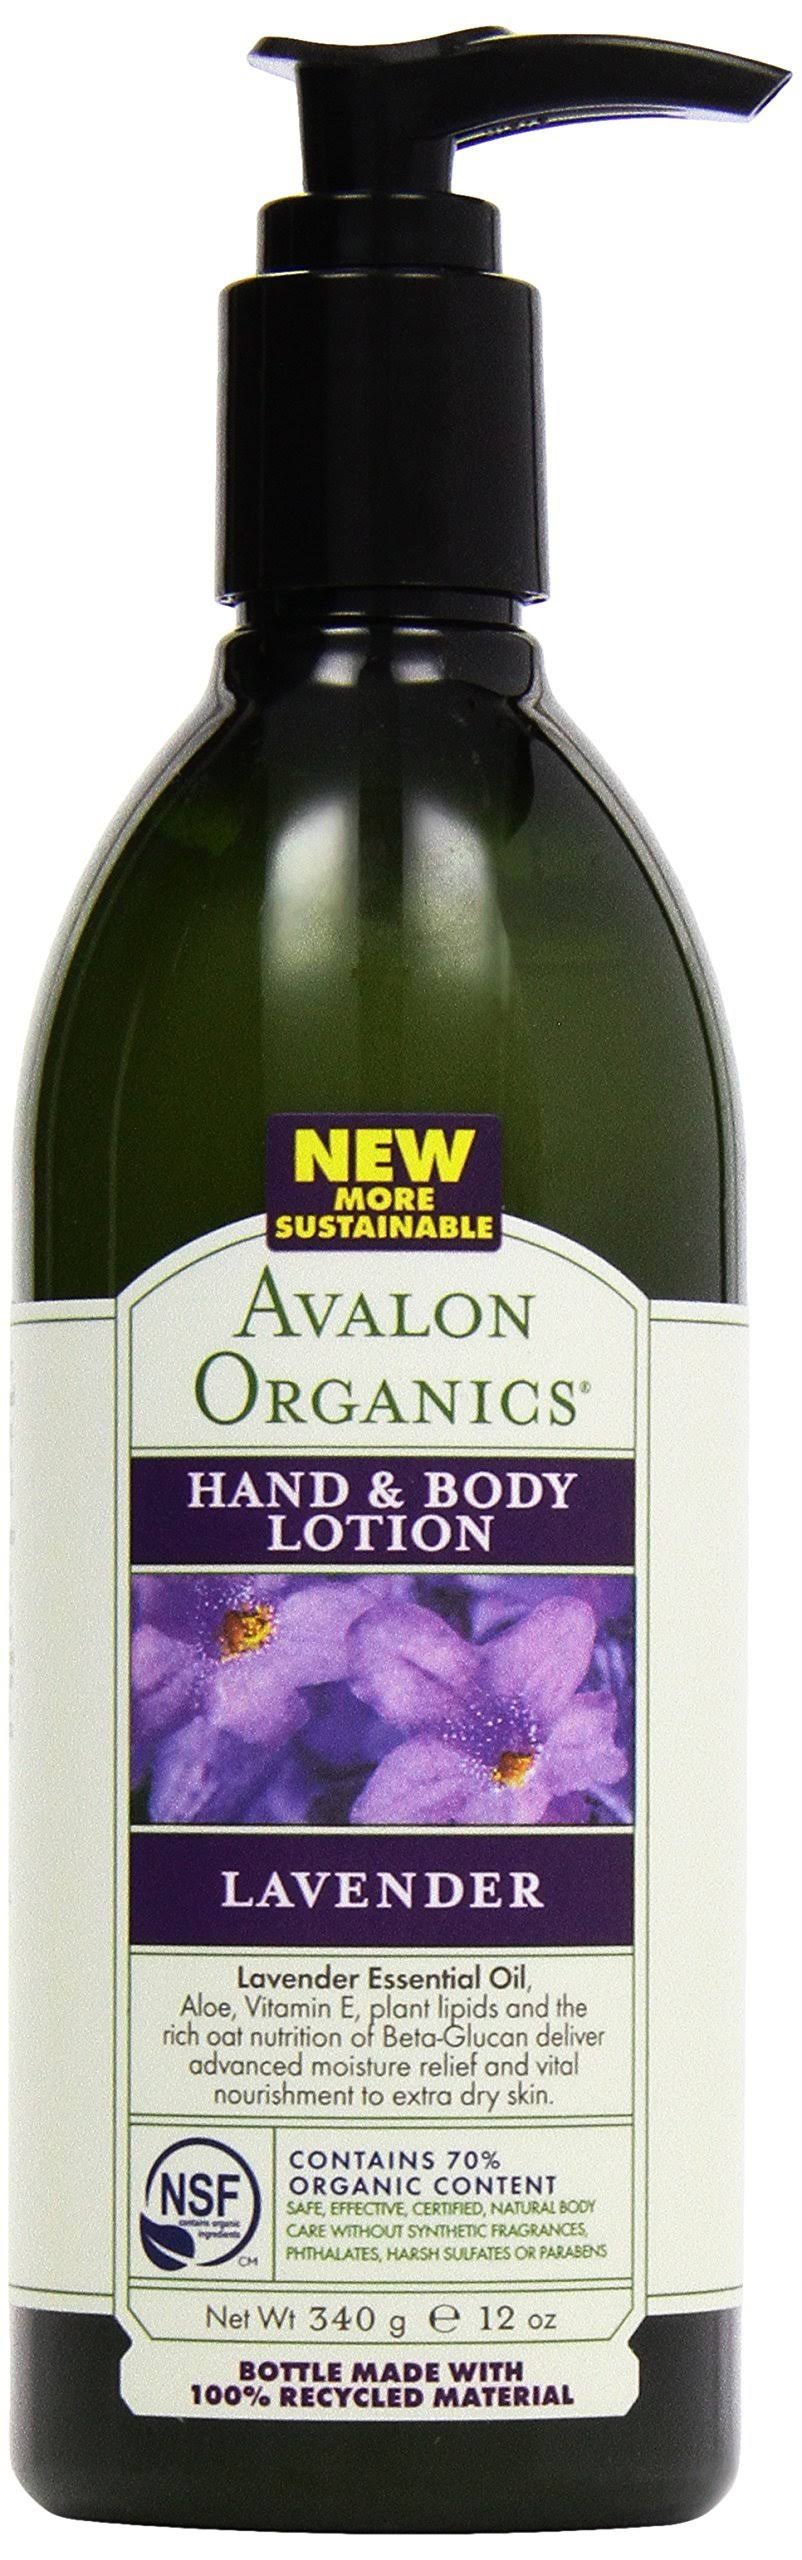 Avalon Organics Hand & Body Lotion - Lavender